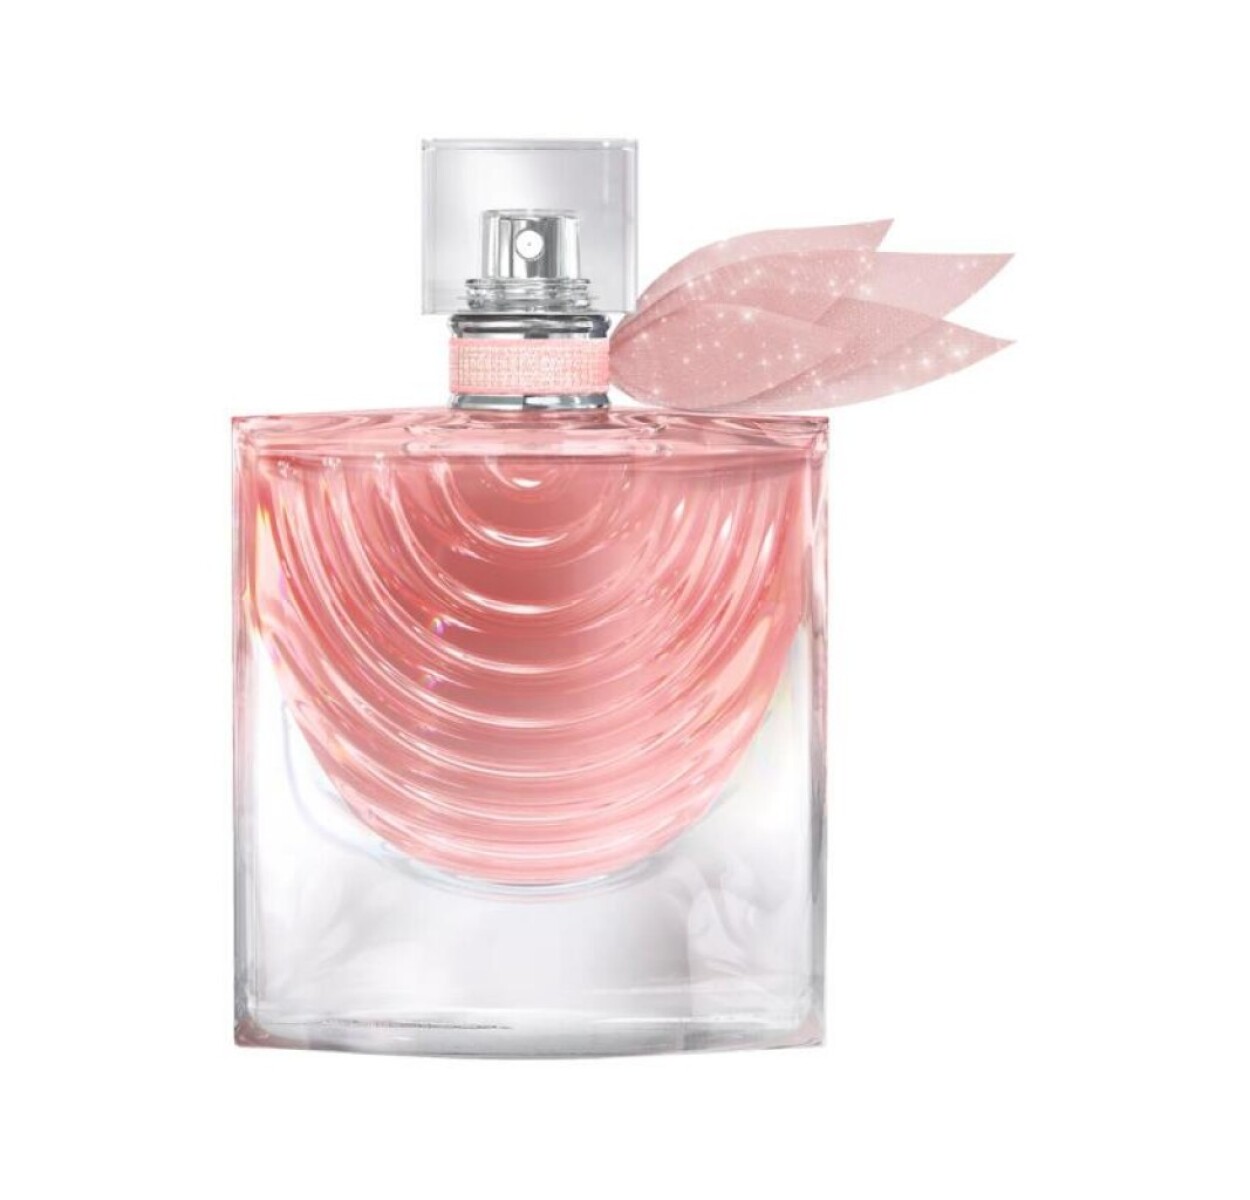 Lancôme Perfume La Vie est Belle IRIS 100ml - Lancôme Perfume La Vie est Belle IRIS 10ml 